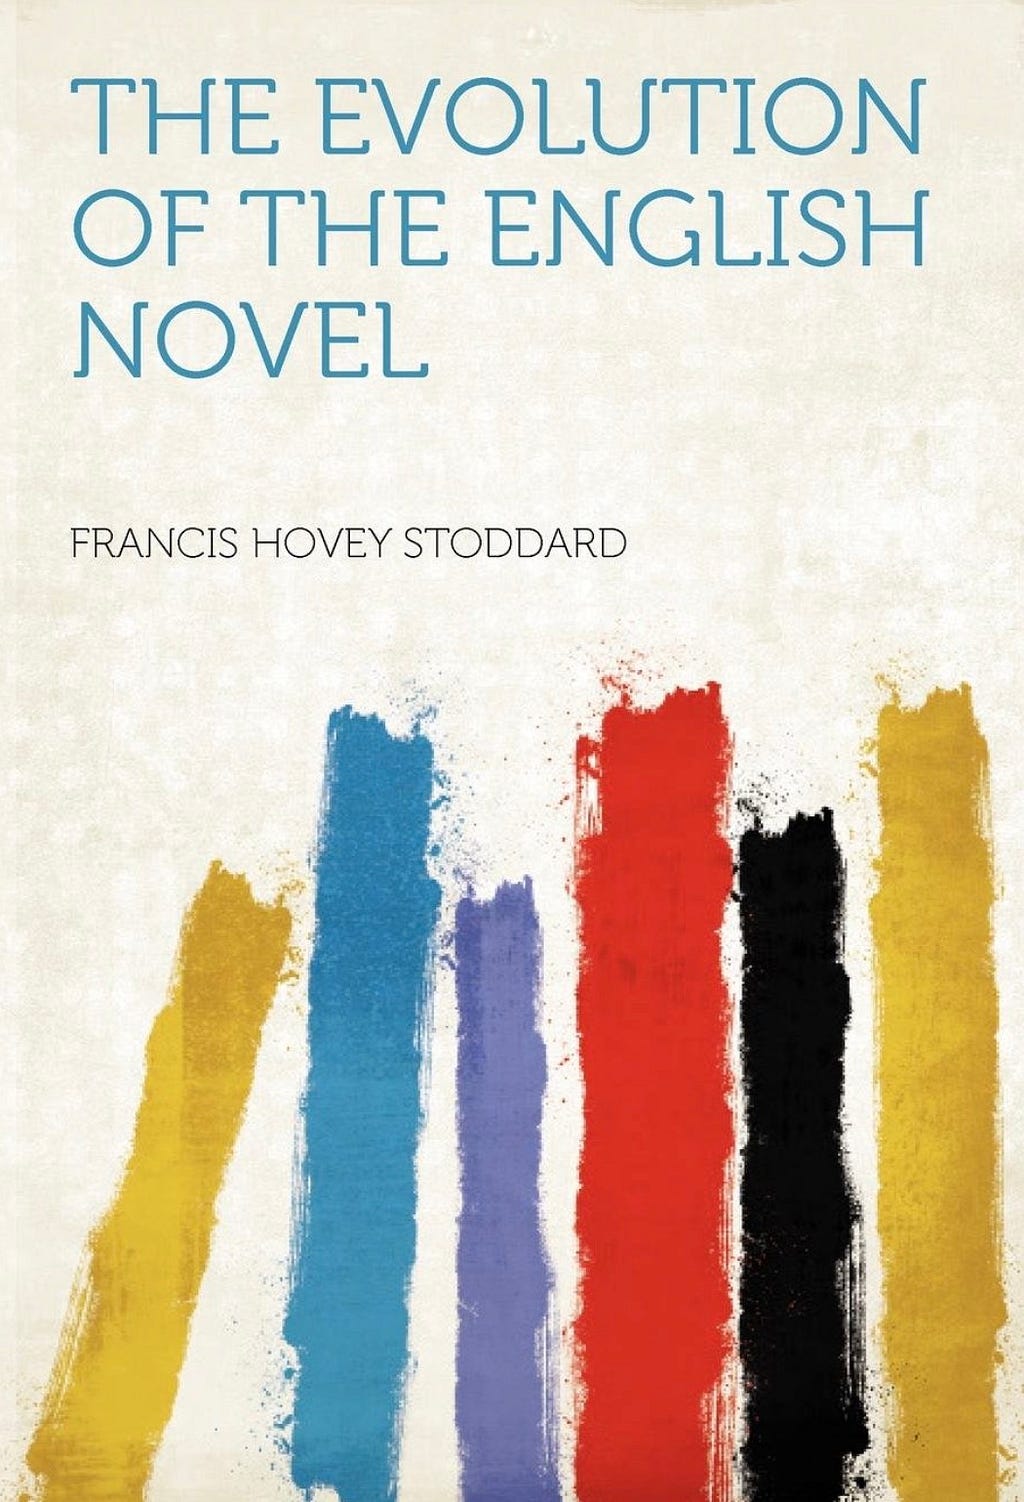 Evolution of the English Novel Francis Hovey Stoddard, 1900